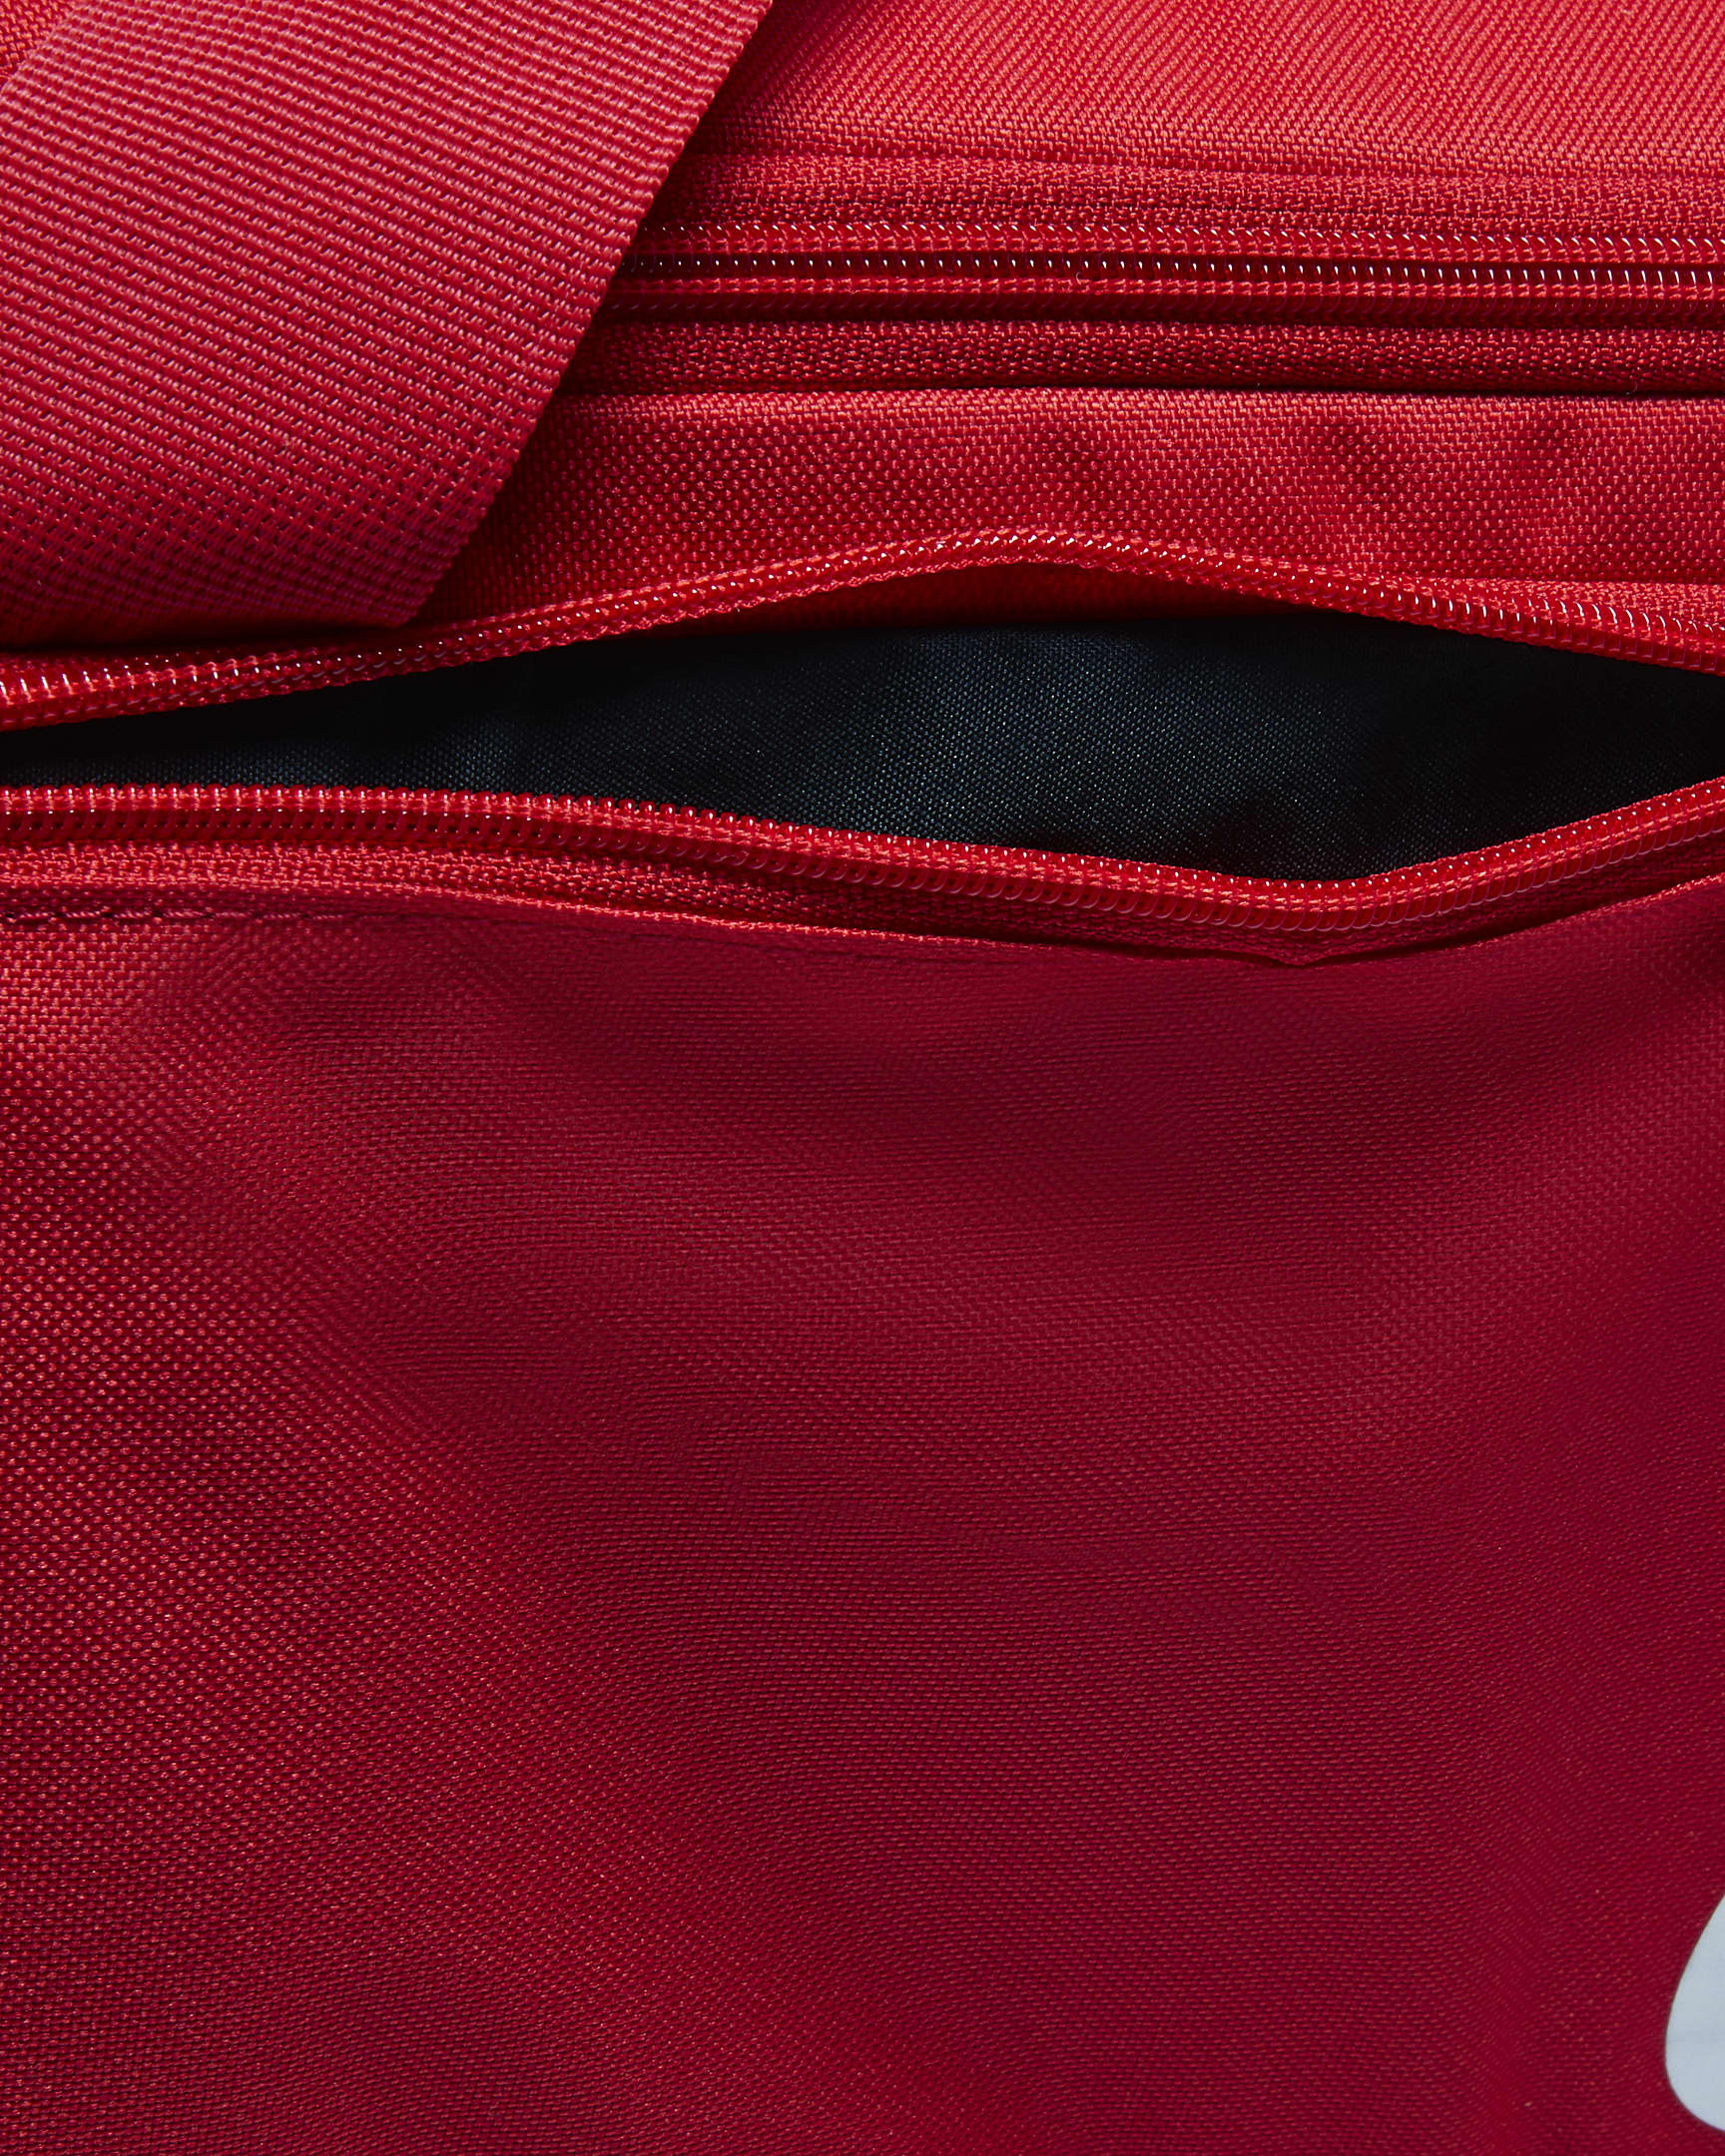 Nike Academy Team Football Hardcase Duffel Bag (Large, 59L). Nike UK